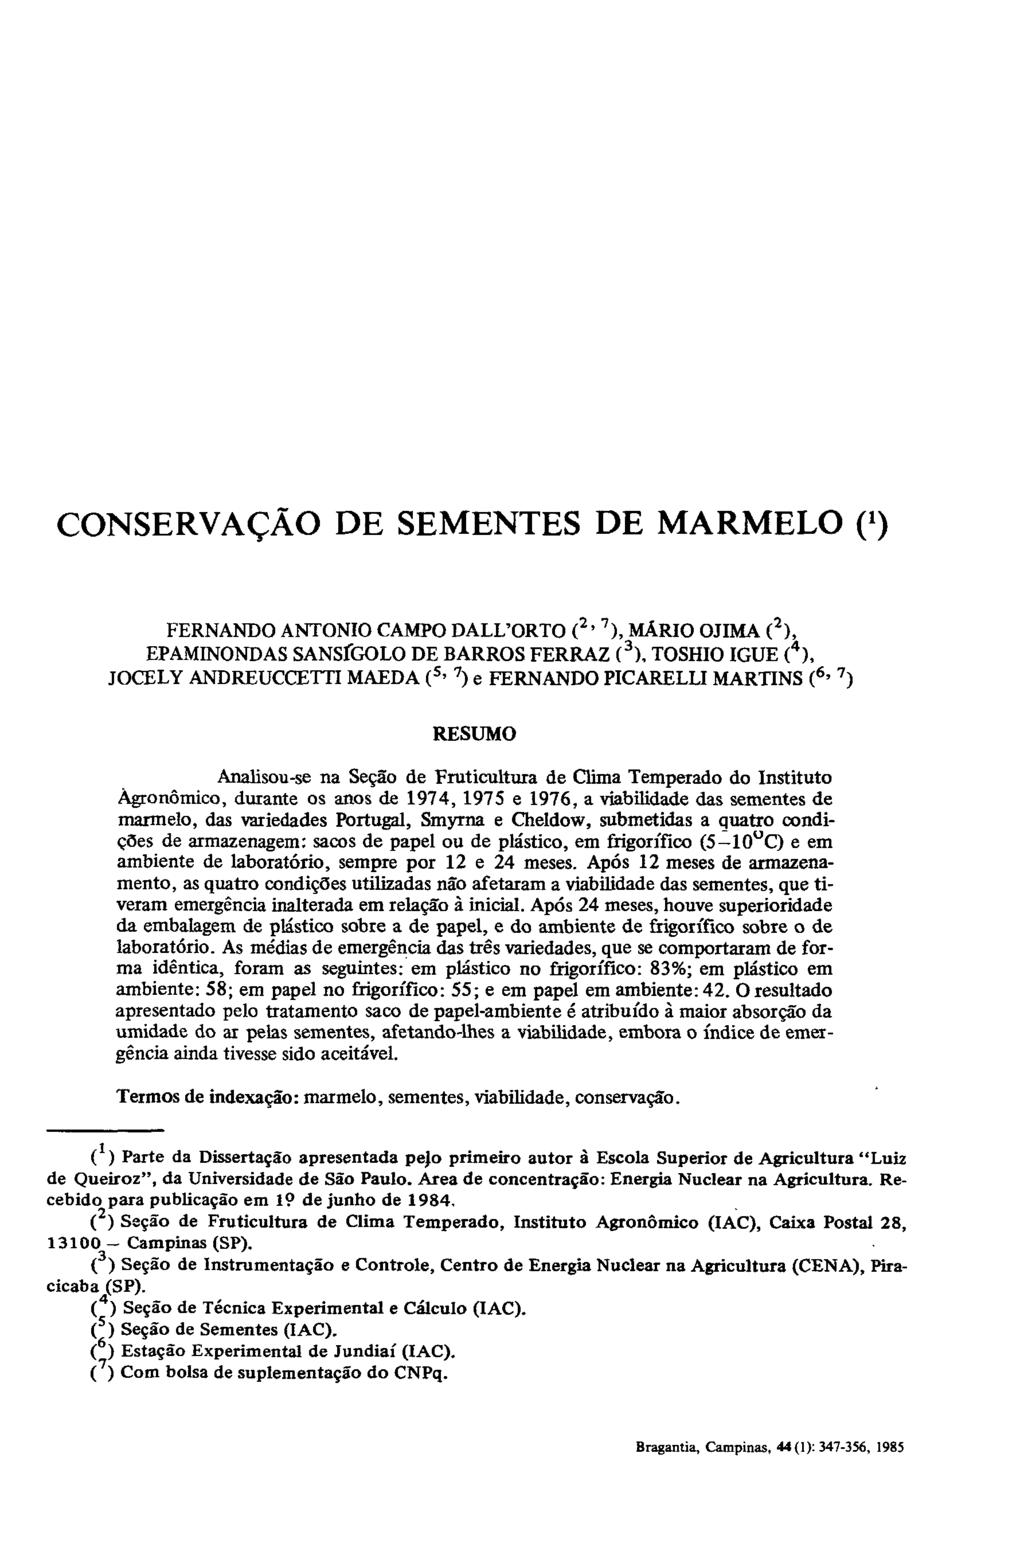 CONSERVAÇÃO DE SEMENTES DE MARMELO ( x ) FERNANDO ANTÓNIO CAMPO DALUORTO ( 2 ' 7 ), MÁRIO OJIMA ( 2 ), EPAMINONDAS SANSfGOLO DE BARROS FERRAZ ( 3 ), TOSHIO IGUE ( 4 ), JOCELY ANDREUCCETTI MAEDA ( s '